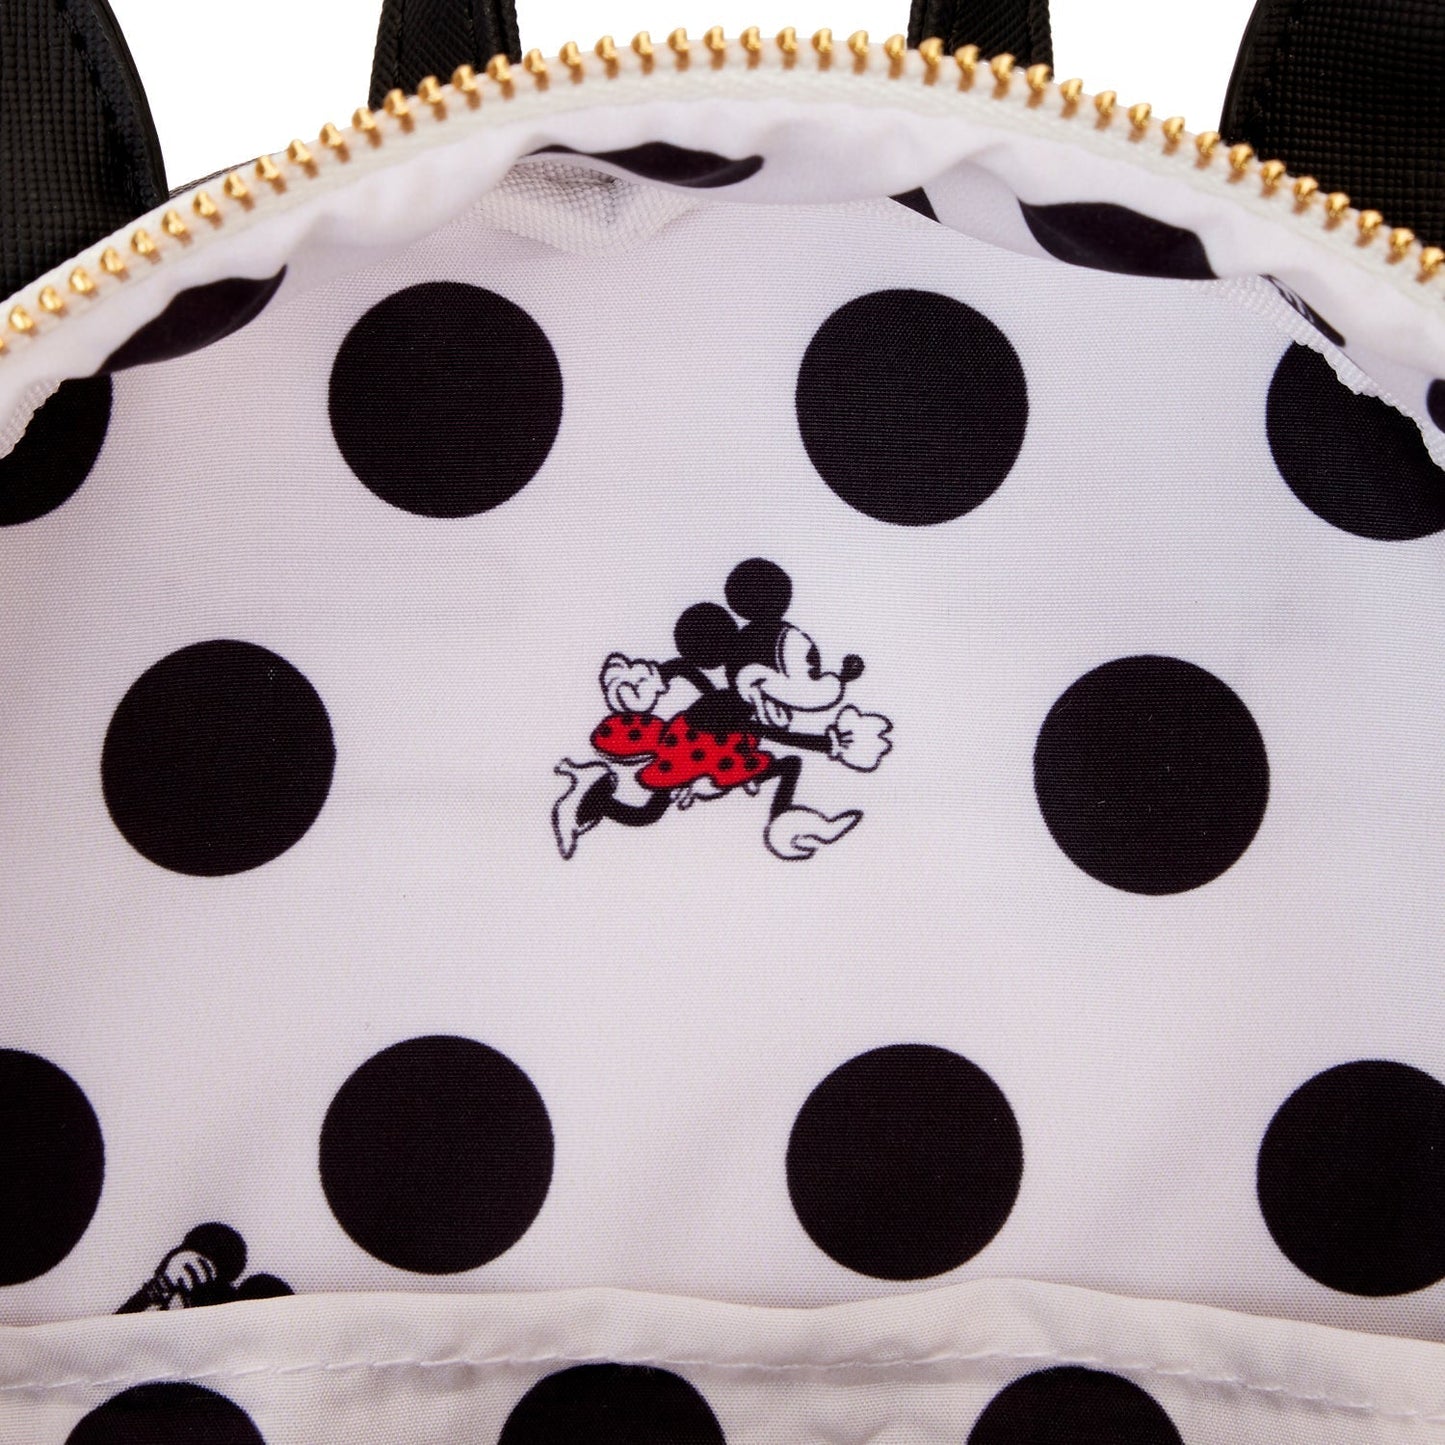 Minnie Mouse Dots Classic Mini Backpack LFY